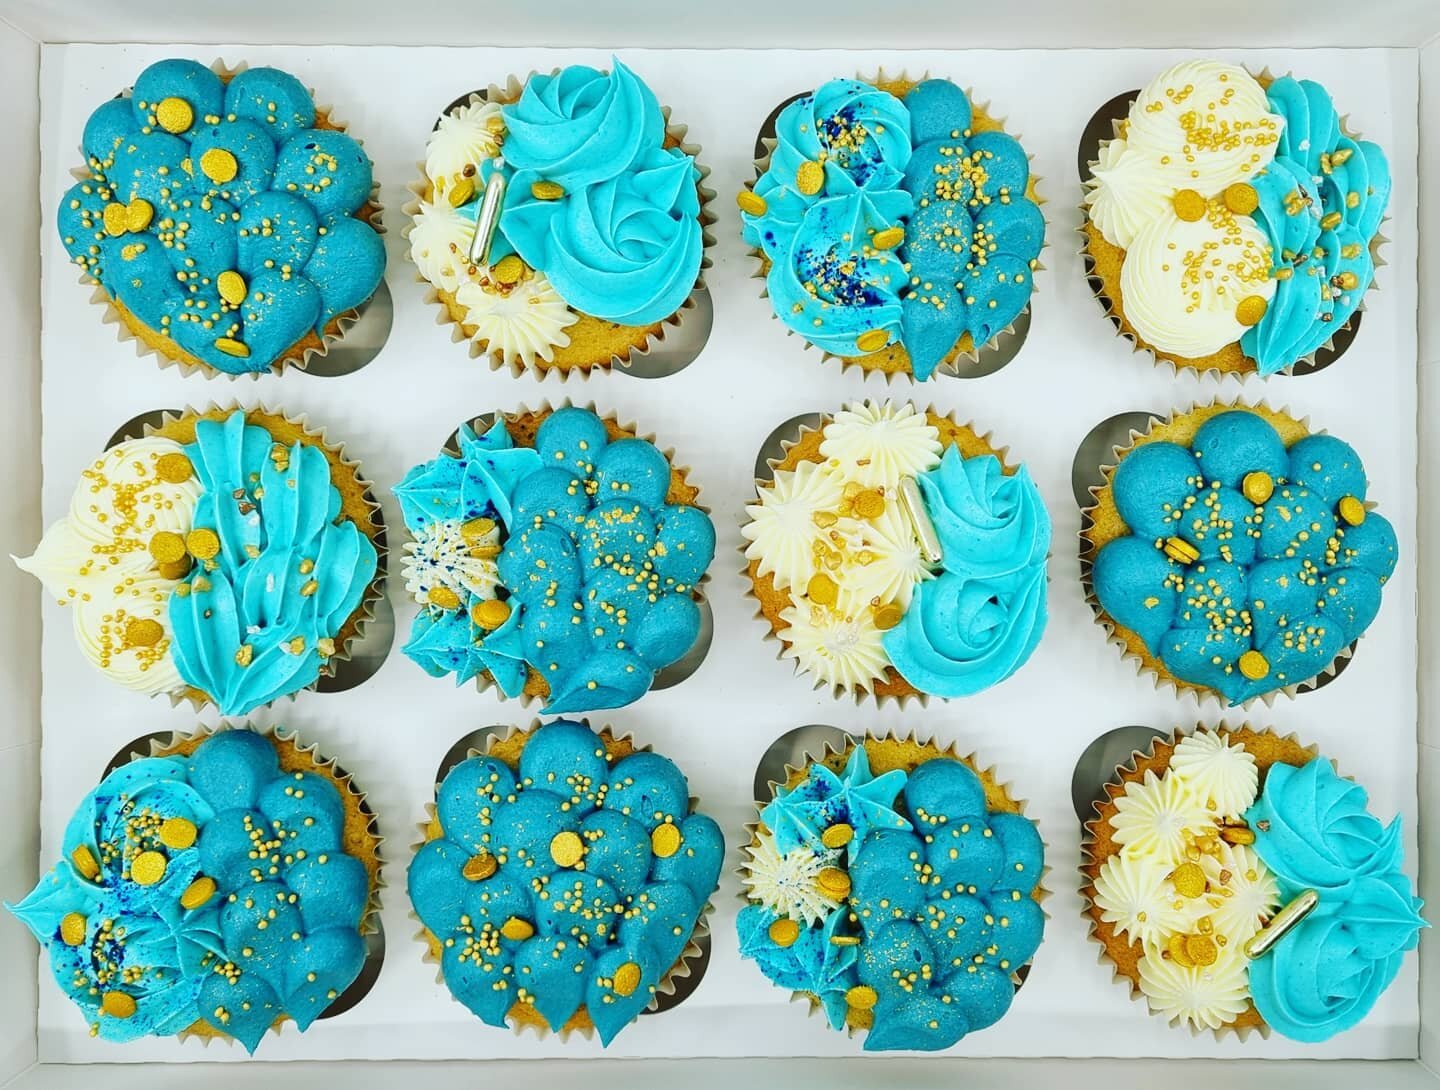 Cupcake Giftbox to celebrate a new baby boy &amp; wedding anniversary